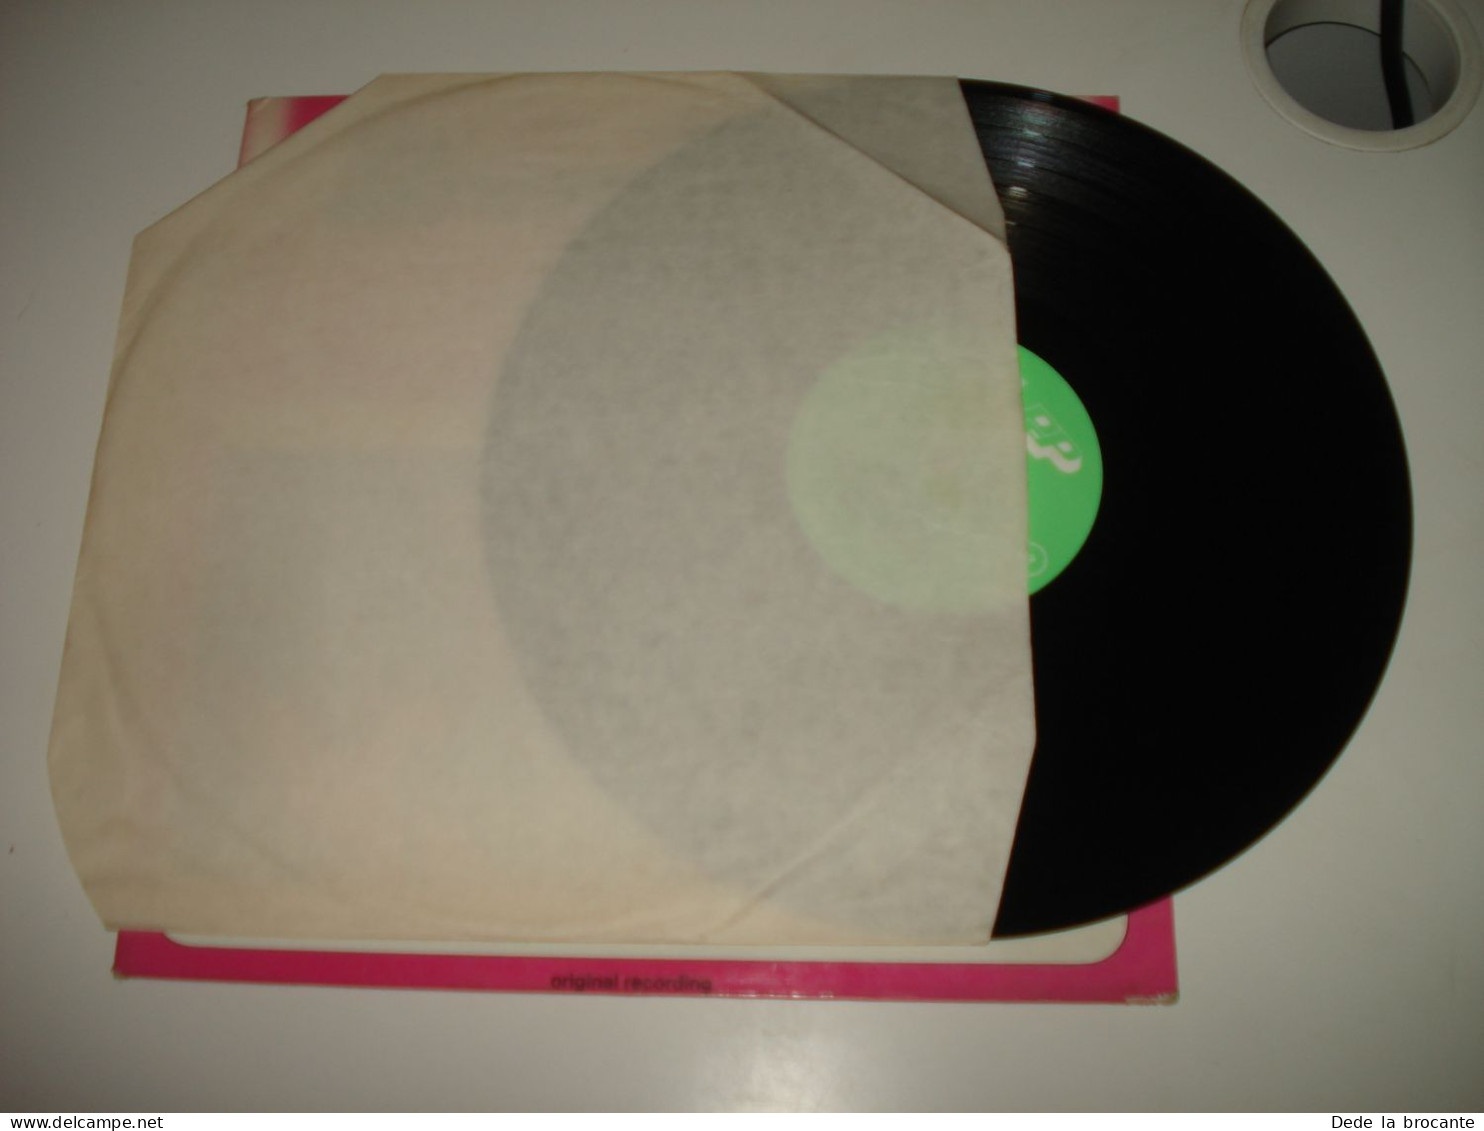 B8 / Brenda Lee – I'm Sorry - 1  LP  - 4M 032-97089 - Belgique  1975  M/EX - Country & Folk